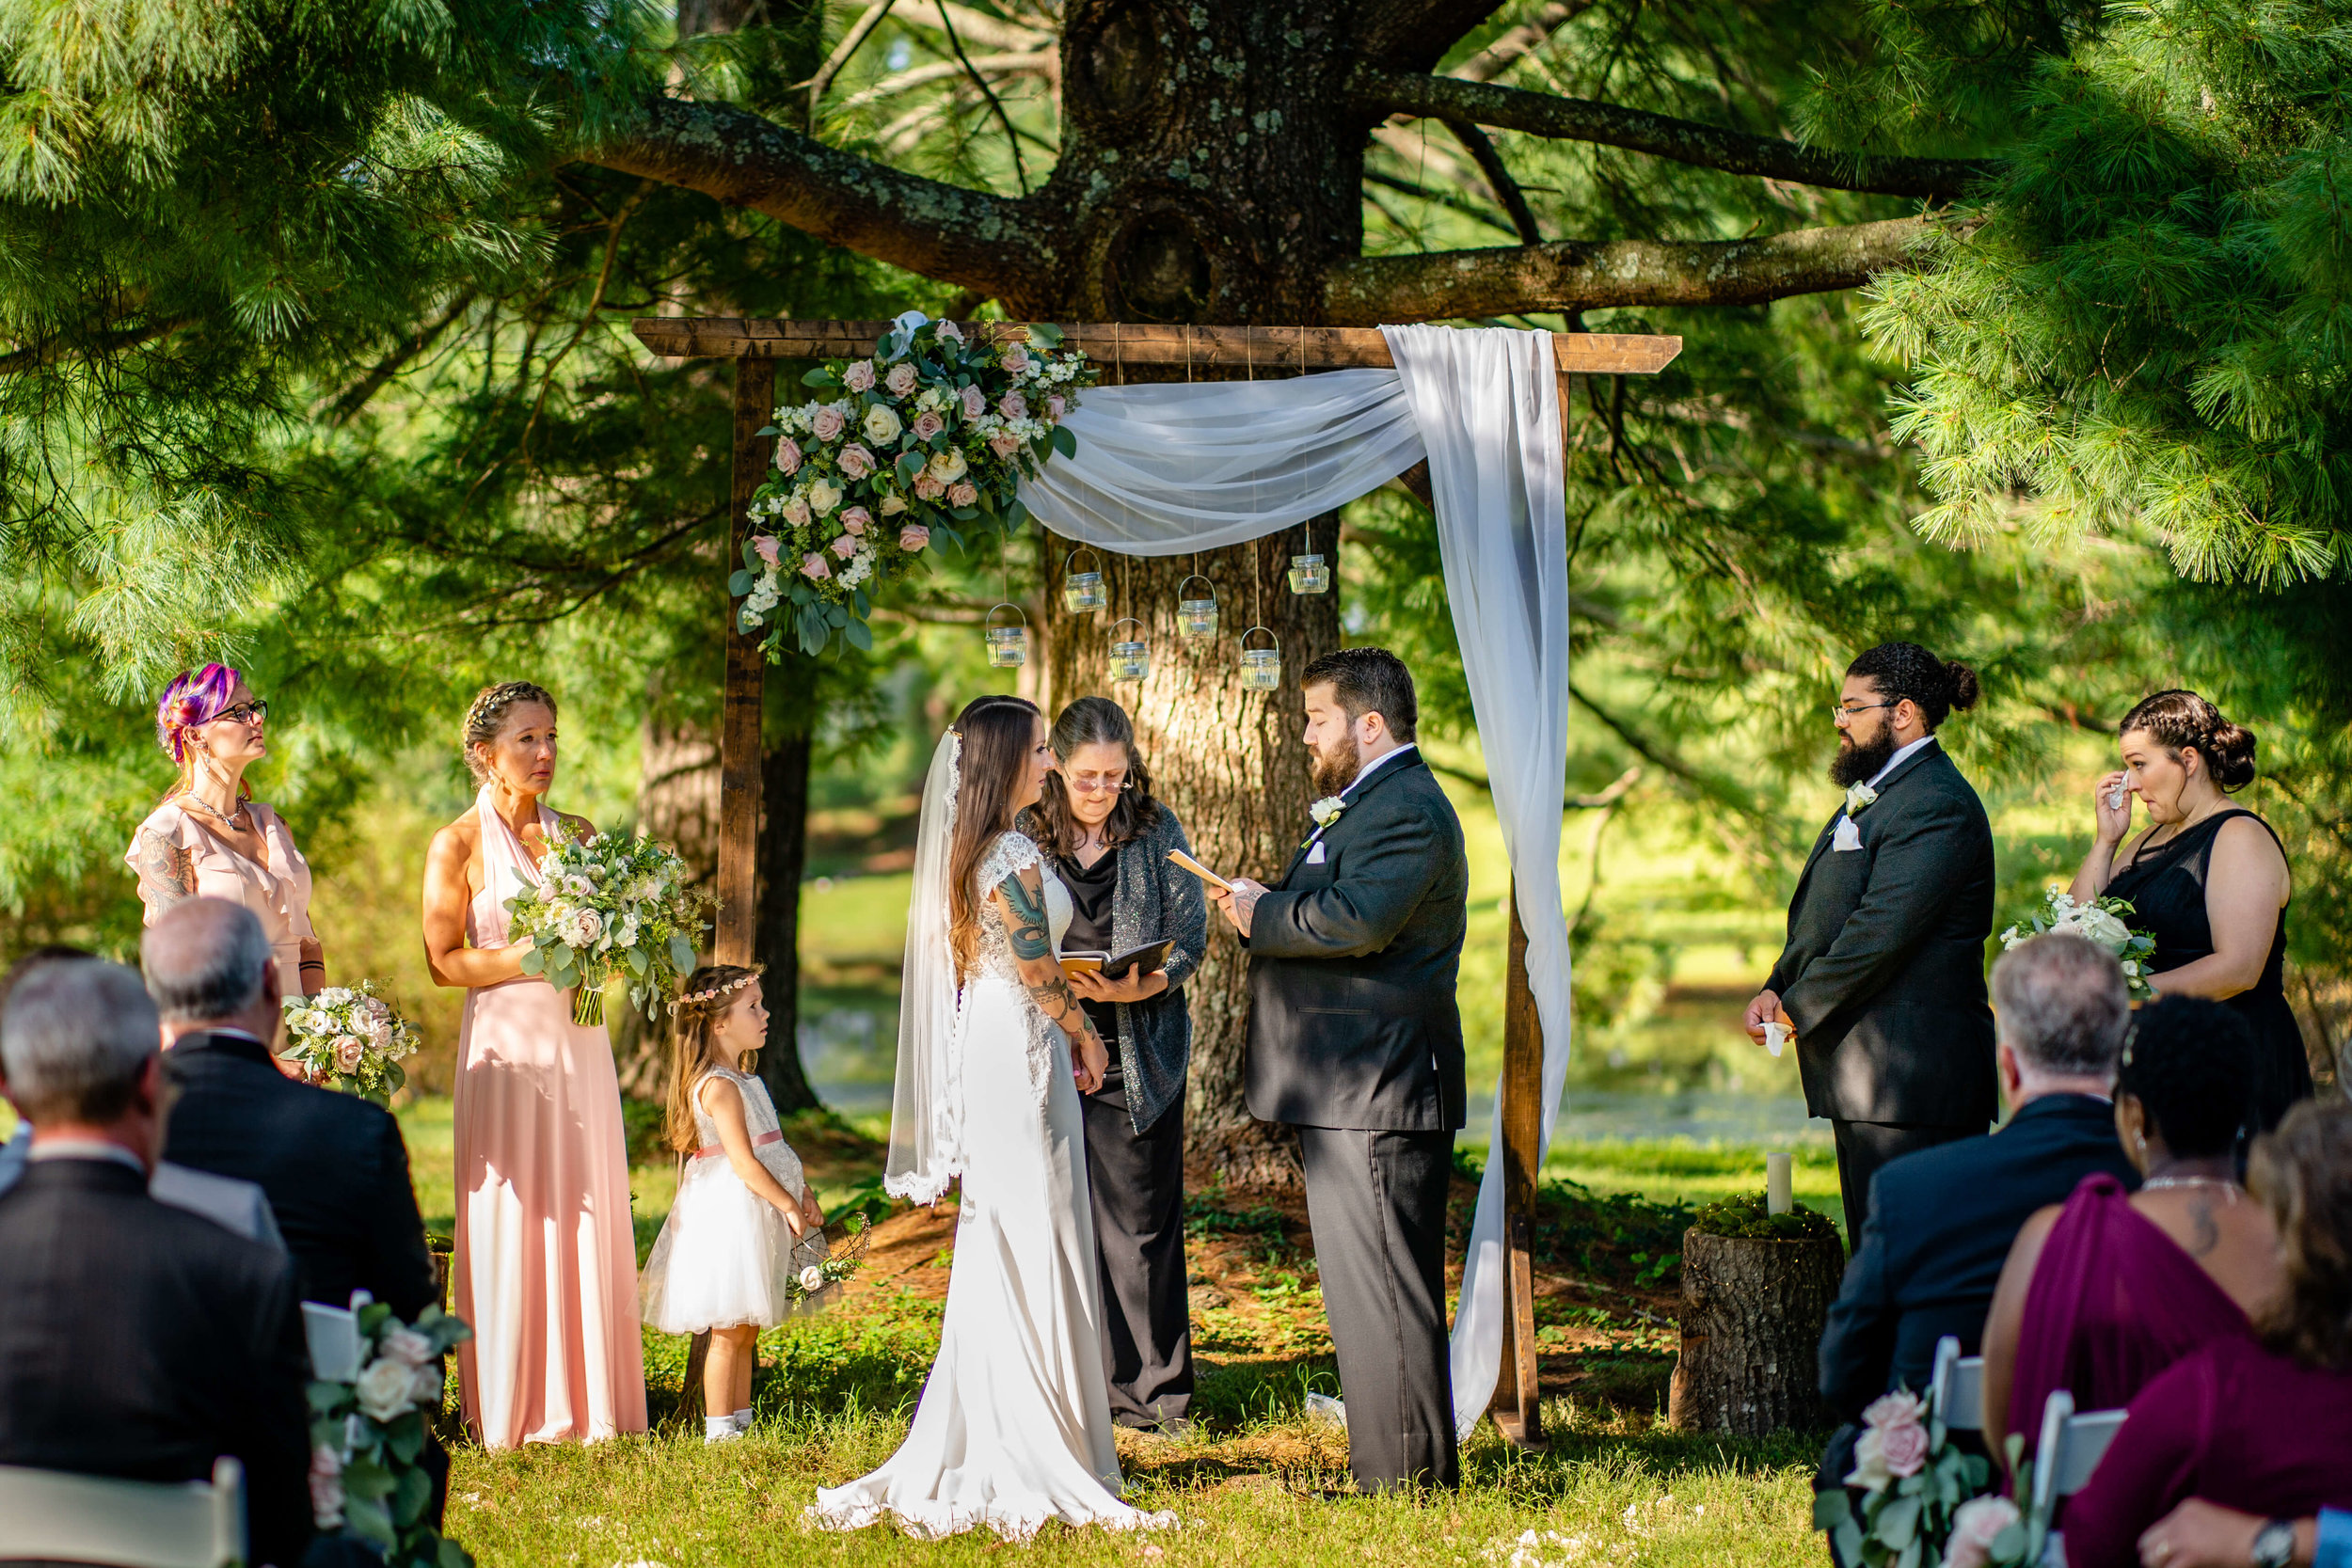 Anslie Tyler Airlie Virginia Smoke Room Wedding in the Woods Small Wedding Ceremony Outdoor Ceremony - 38.jpg